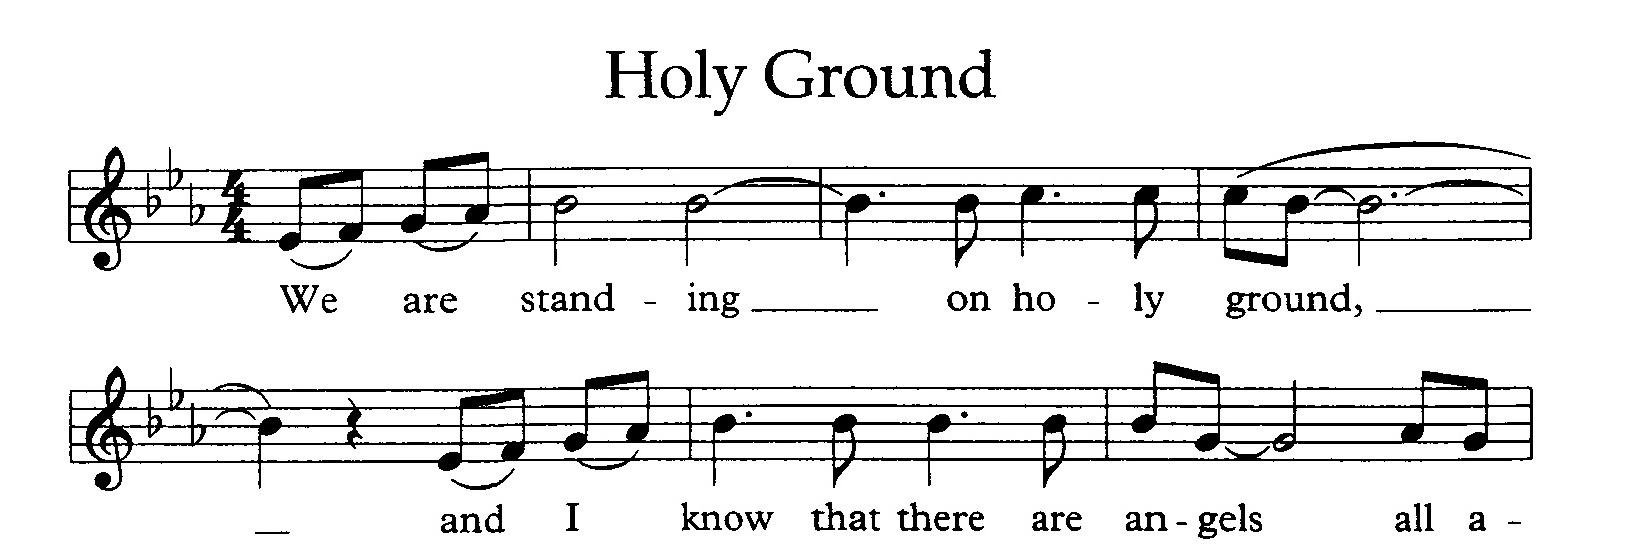 Holy Ground 2.jpg